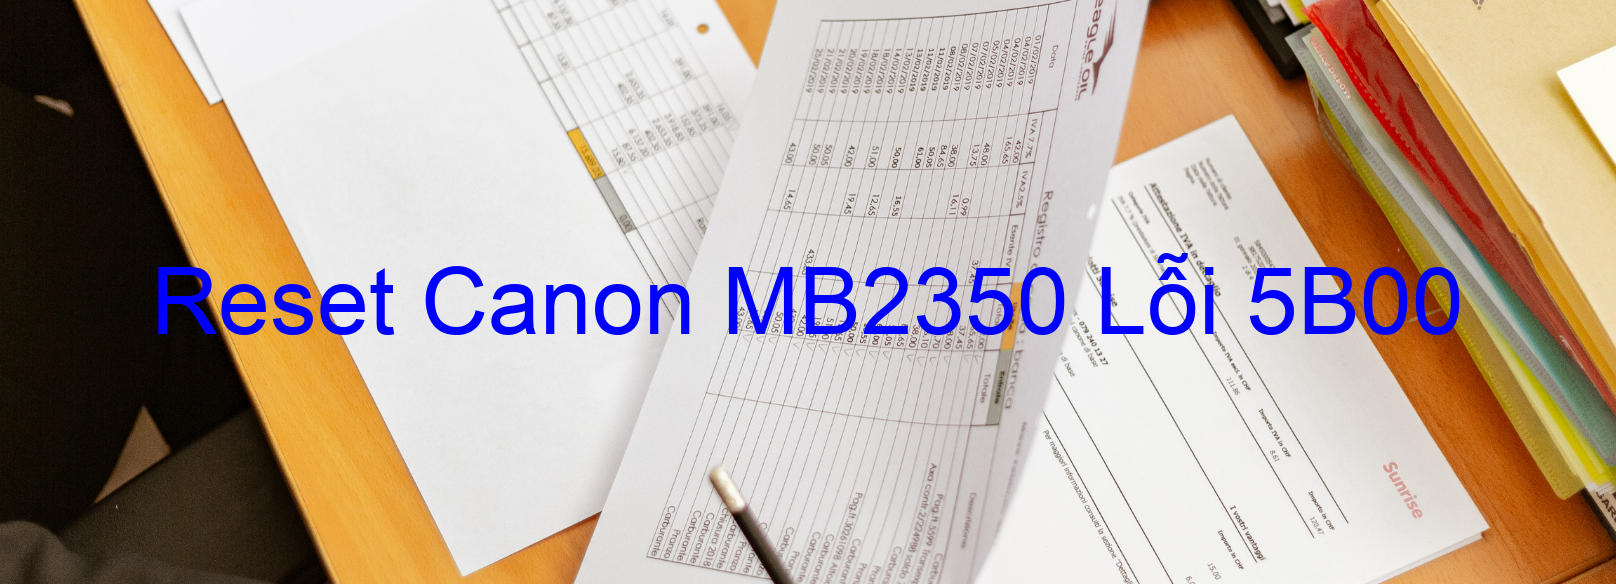 Reset Canon MB2350 Lỗi 5B00